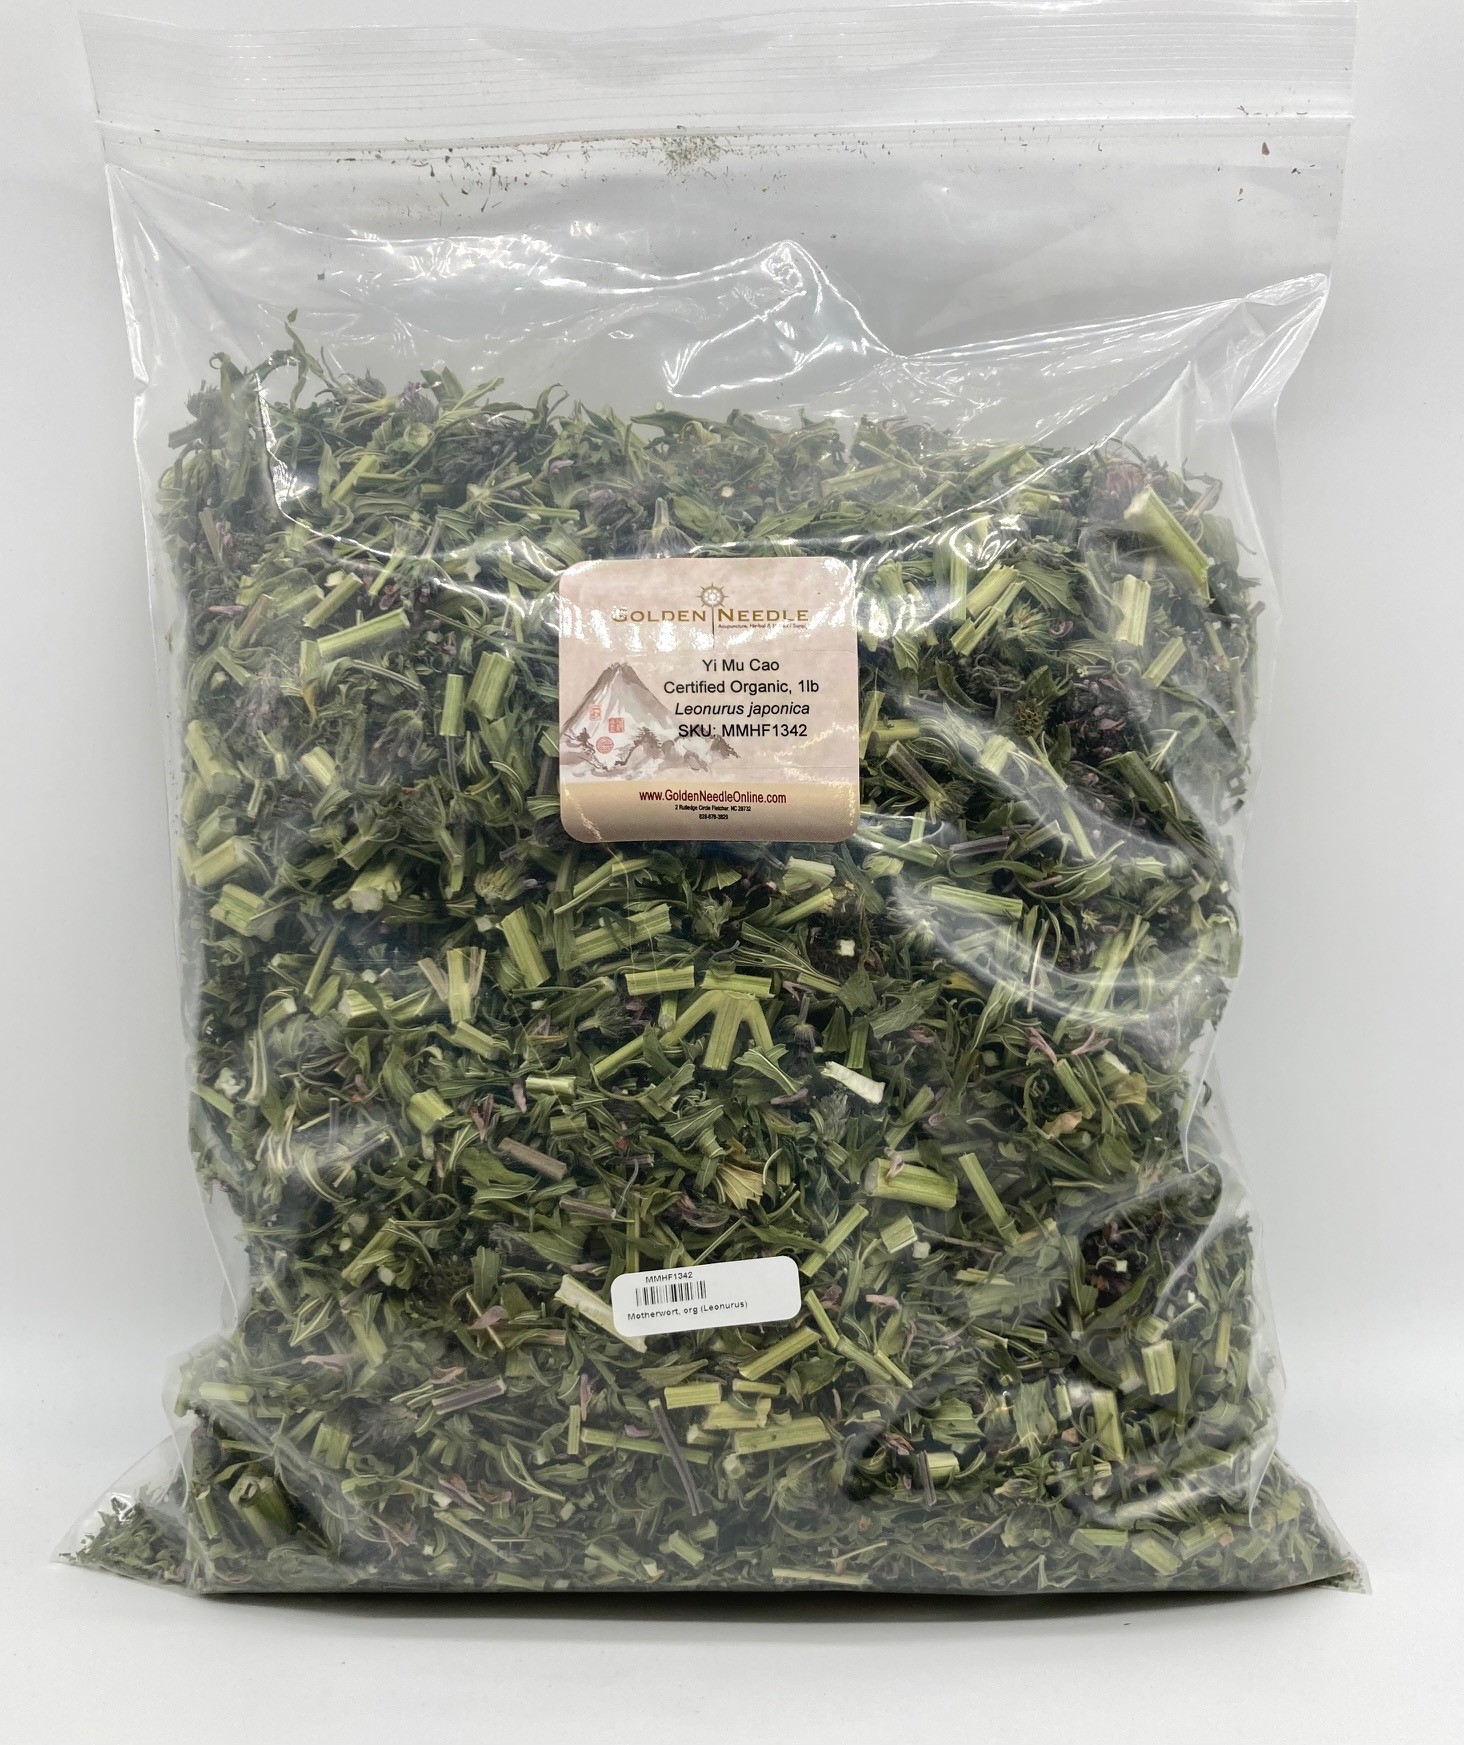 Yi Mu Cao - Chinese Motherwort (Organic/USA Grown), 1lb